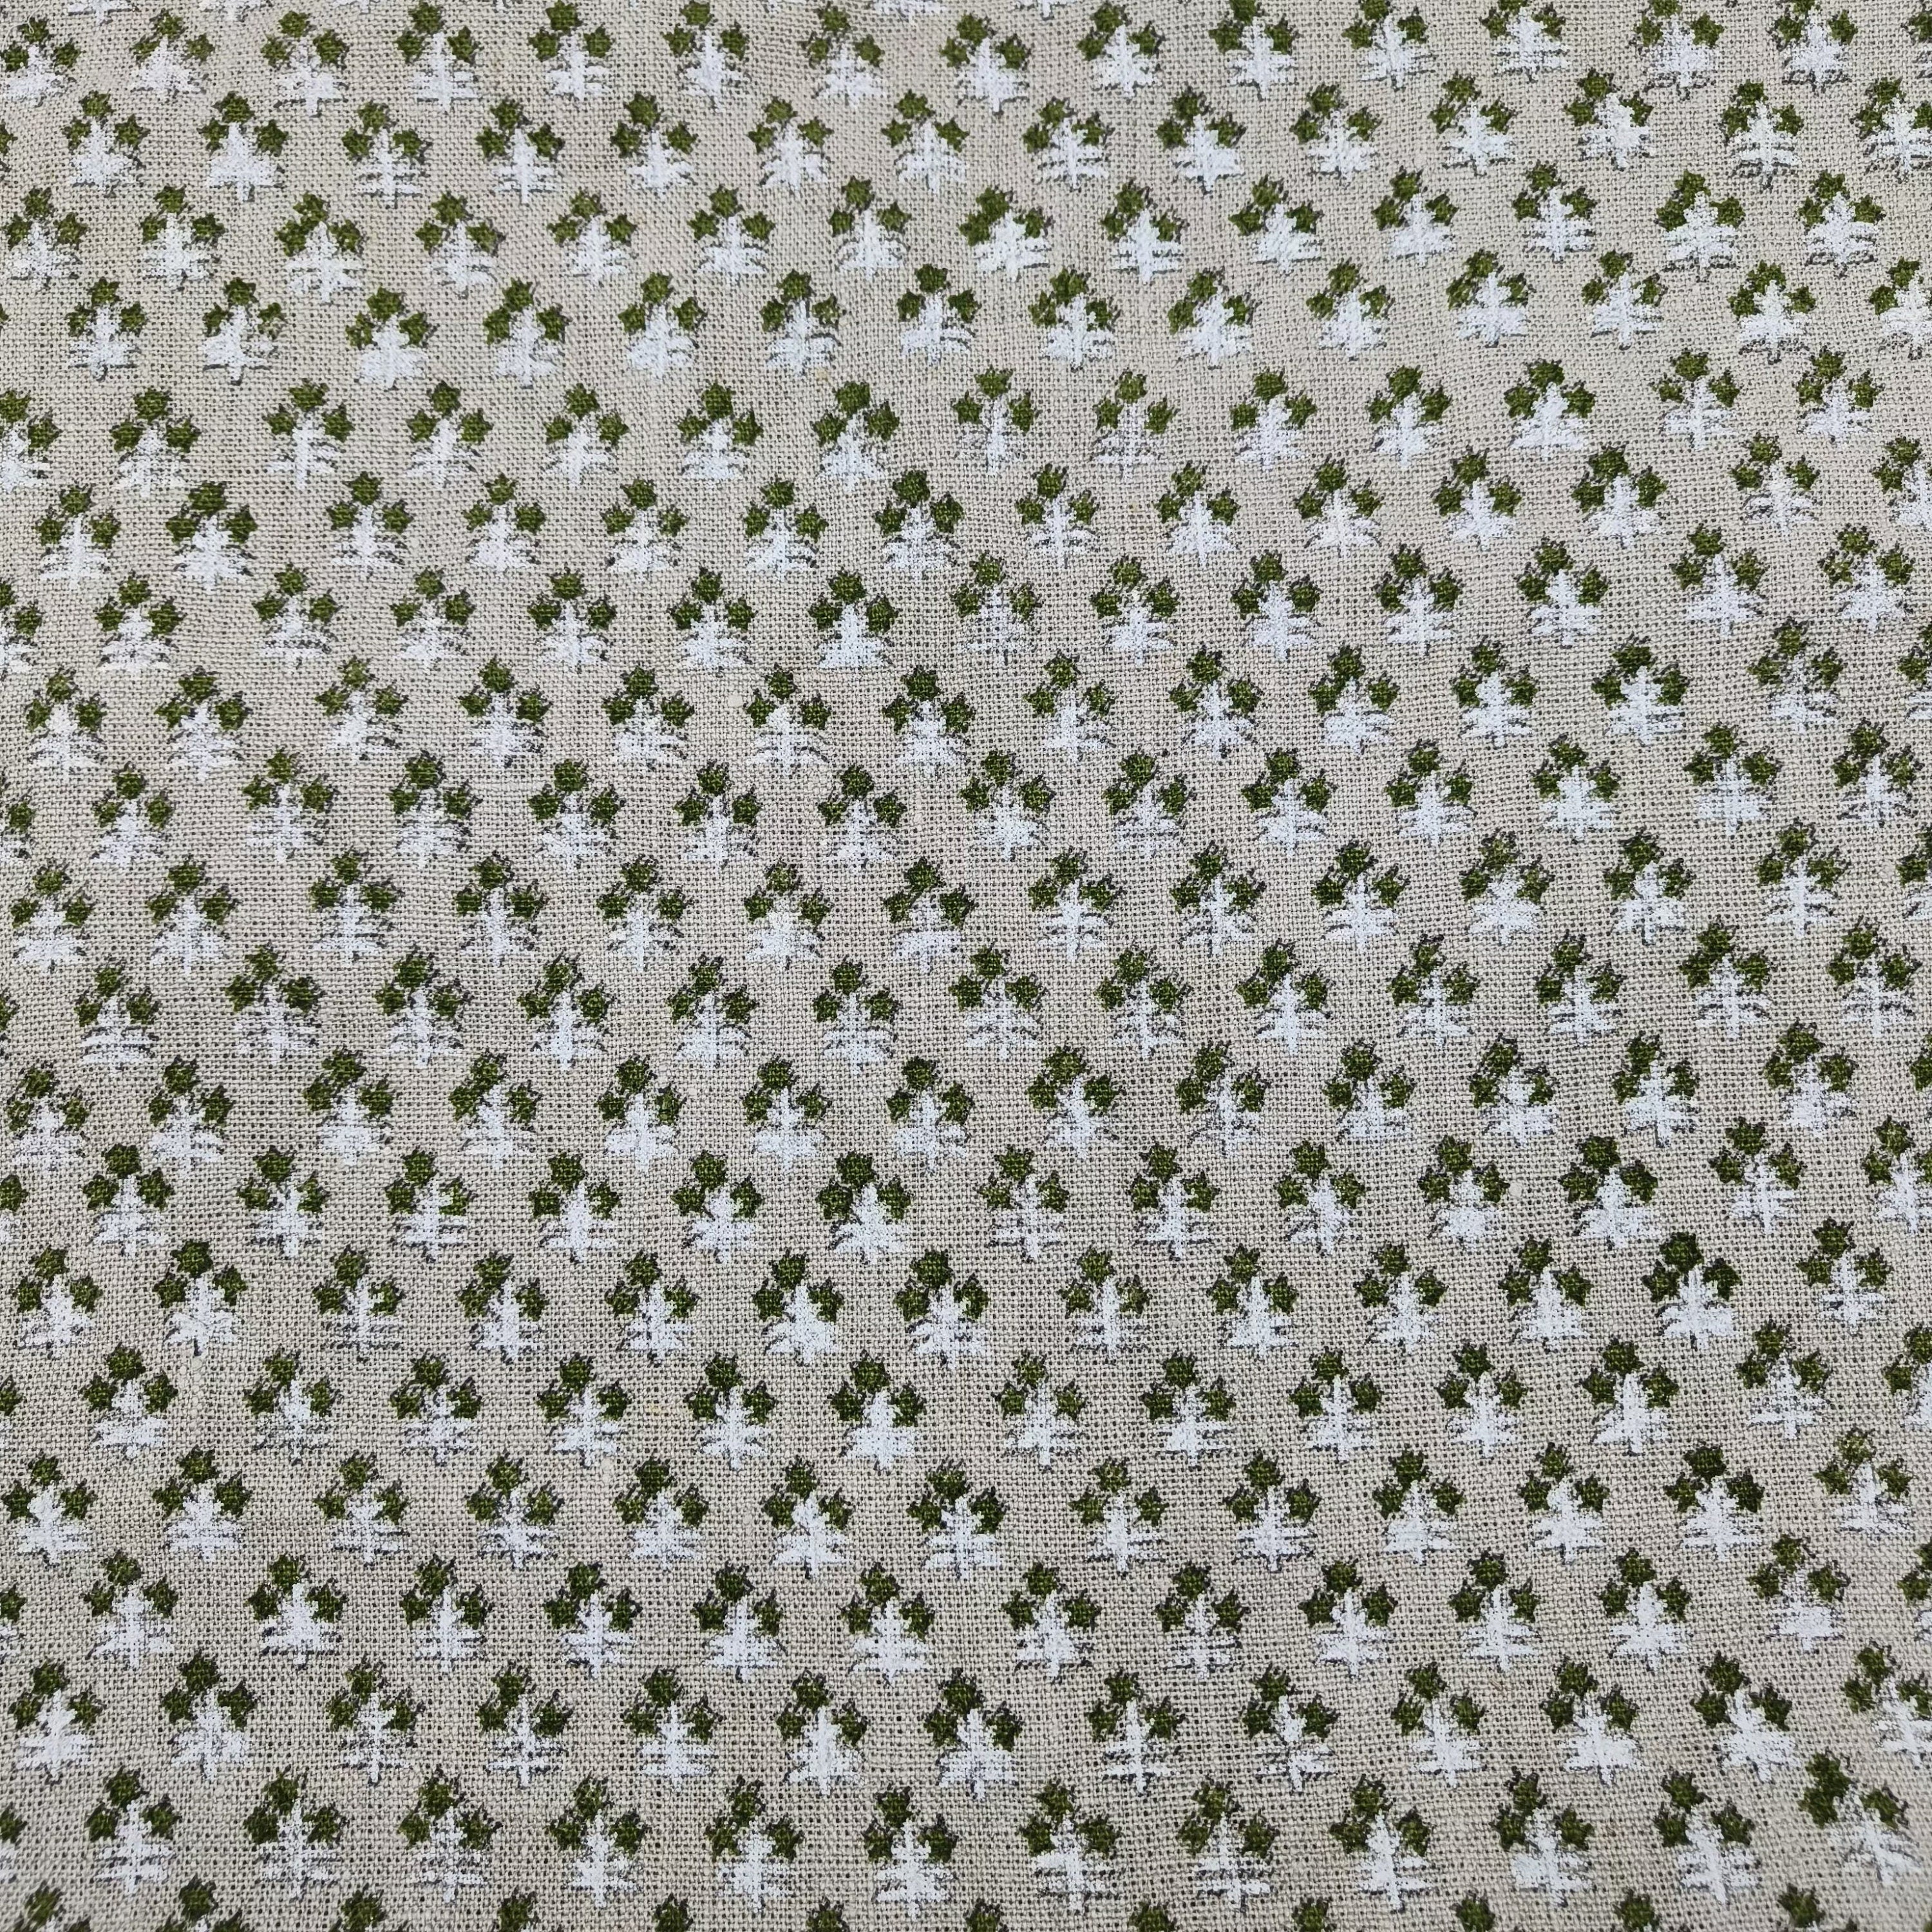 Block Print Linen Fabric, Keseria Green  Linen Hand Block Print  Floral Green And White Color  Heavy Handloom Indian Linen   58"Wide Thick Linen Running Fabric